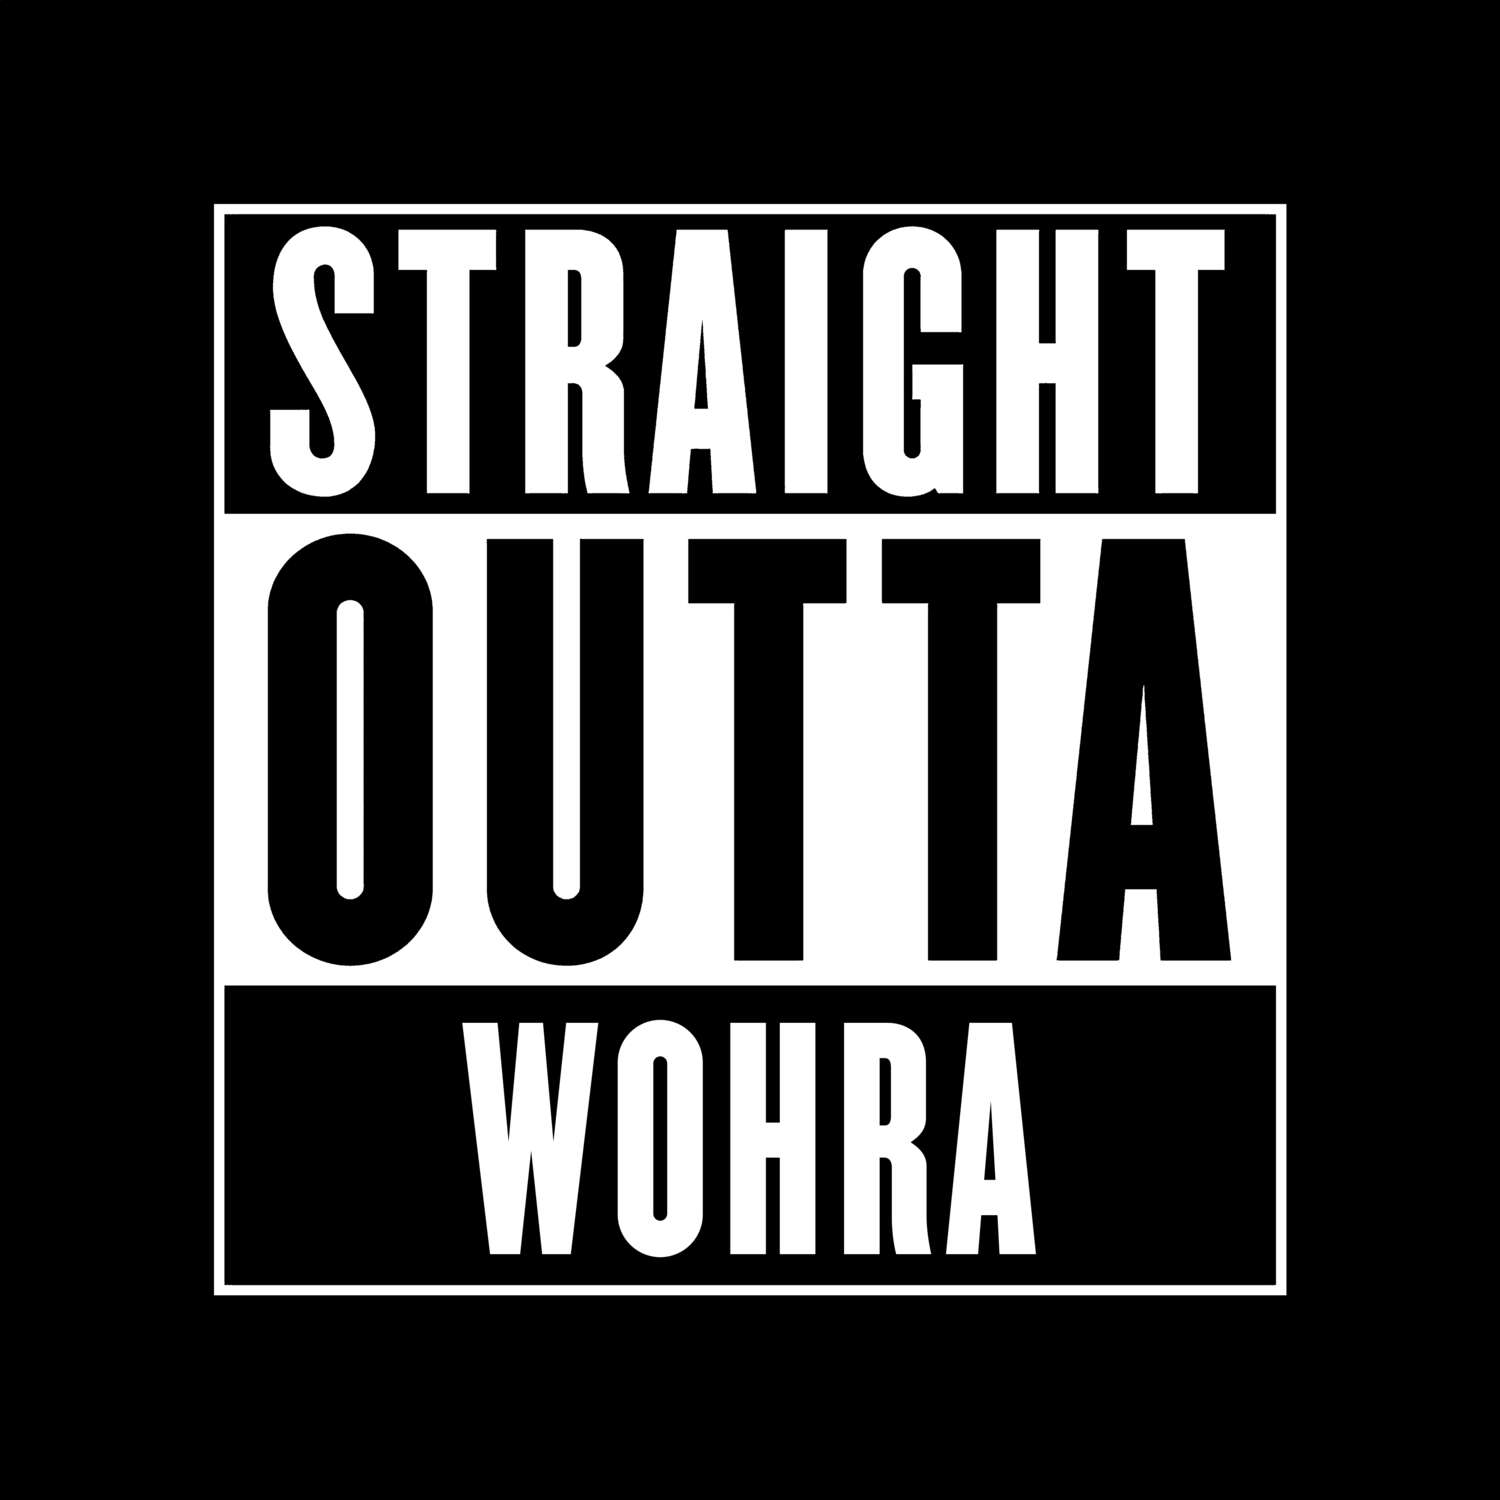 Wohra T-Shirt »Straight Outta«